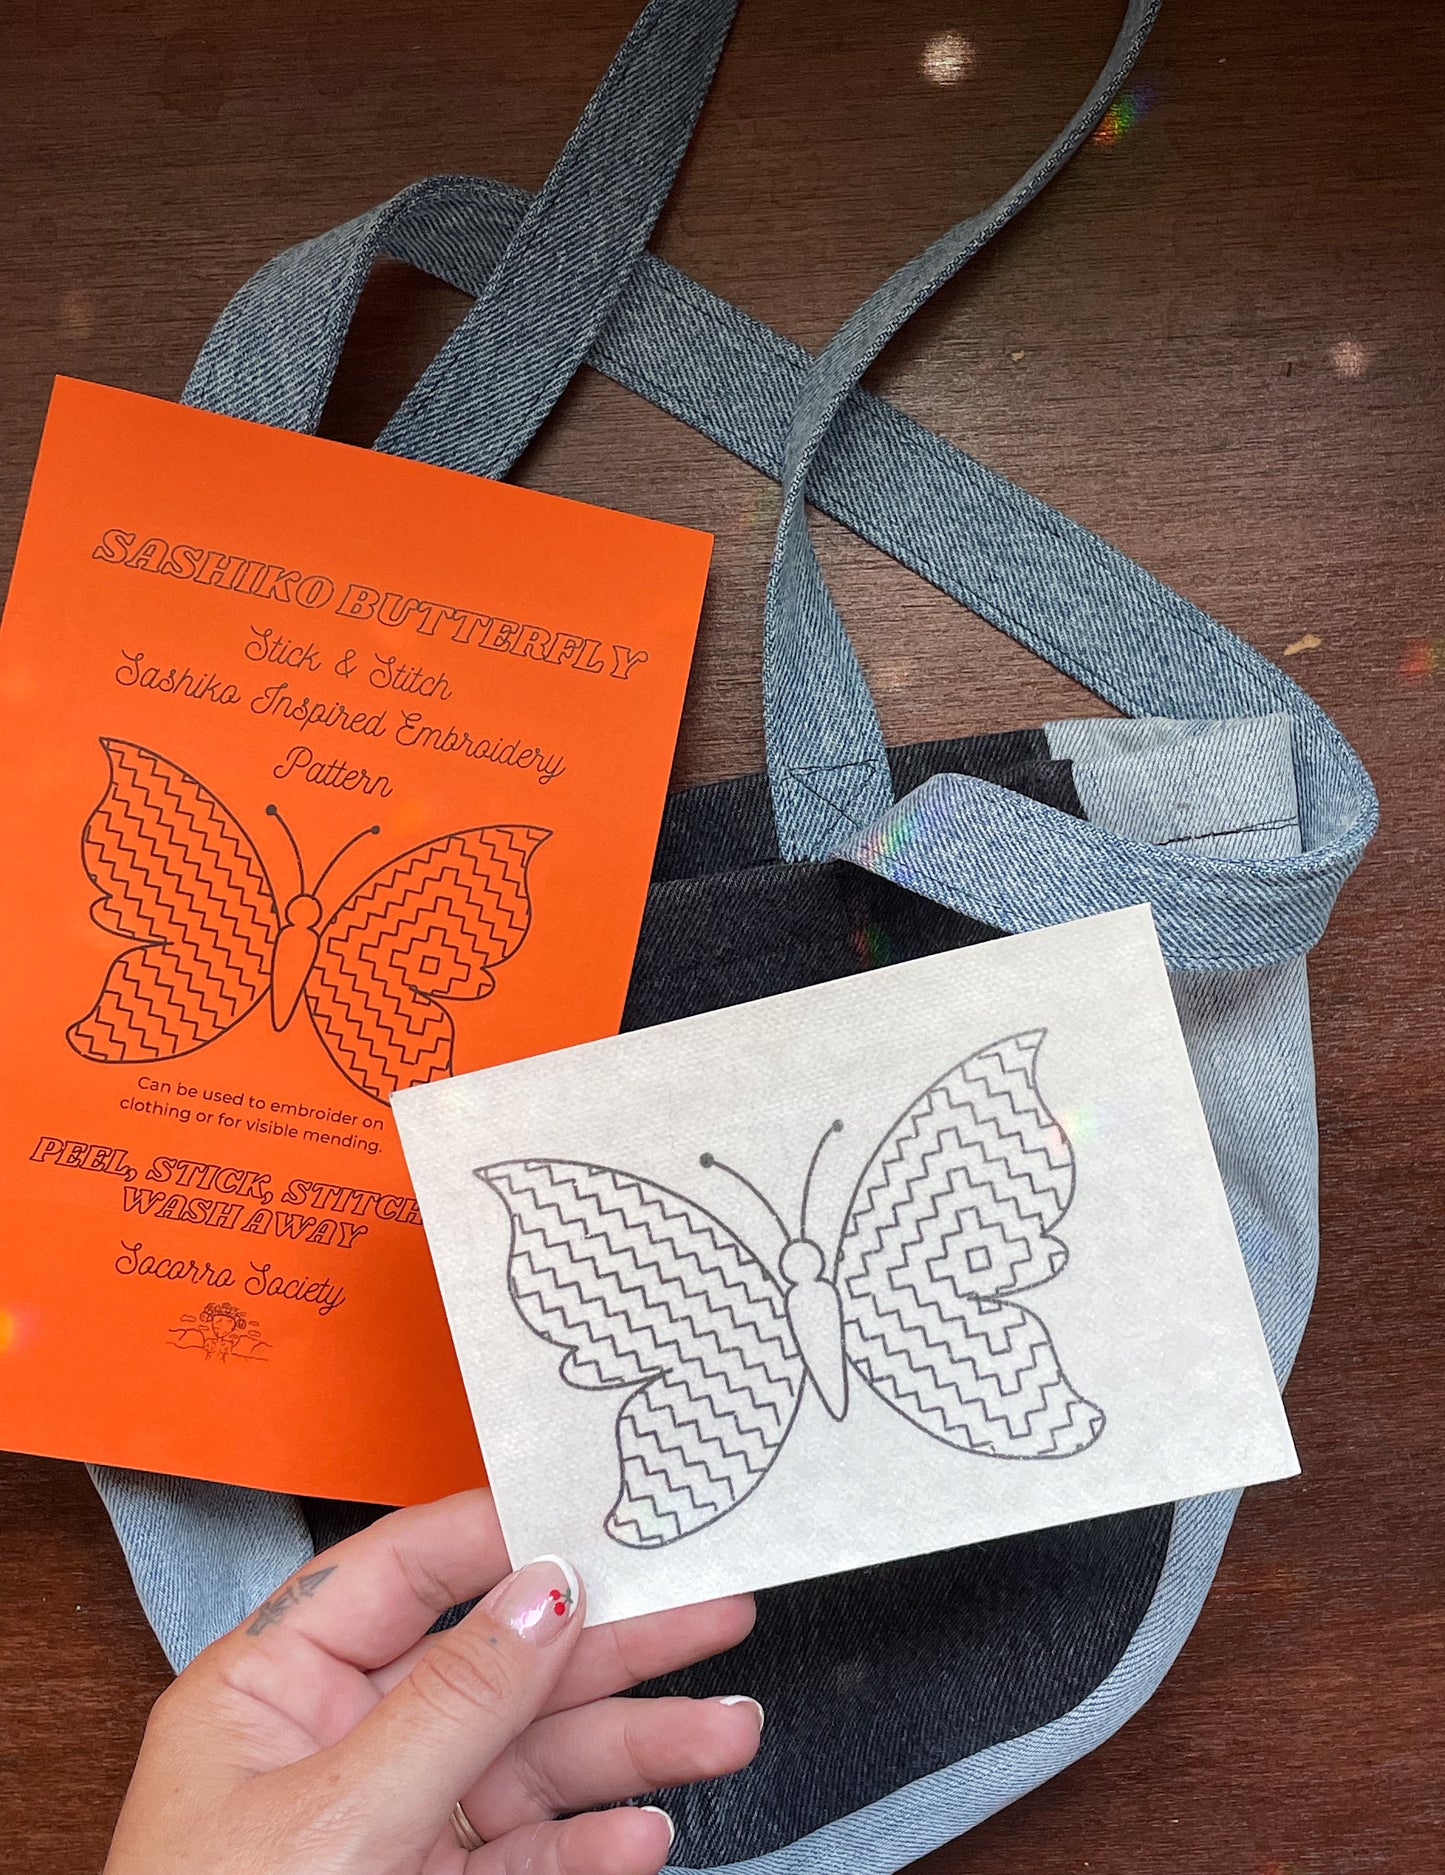 Sashiko Butterfly Stick ‘n Stich Visible Mending Pattern